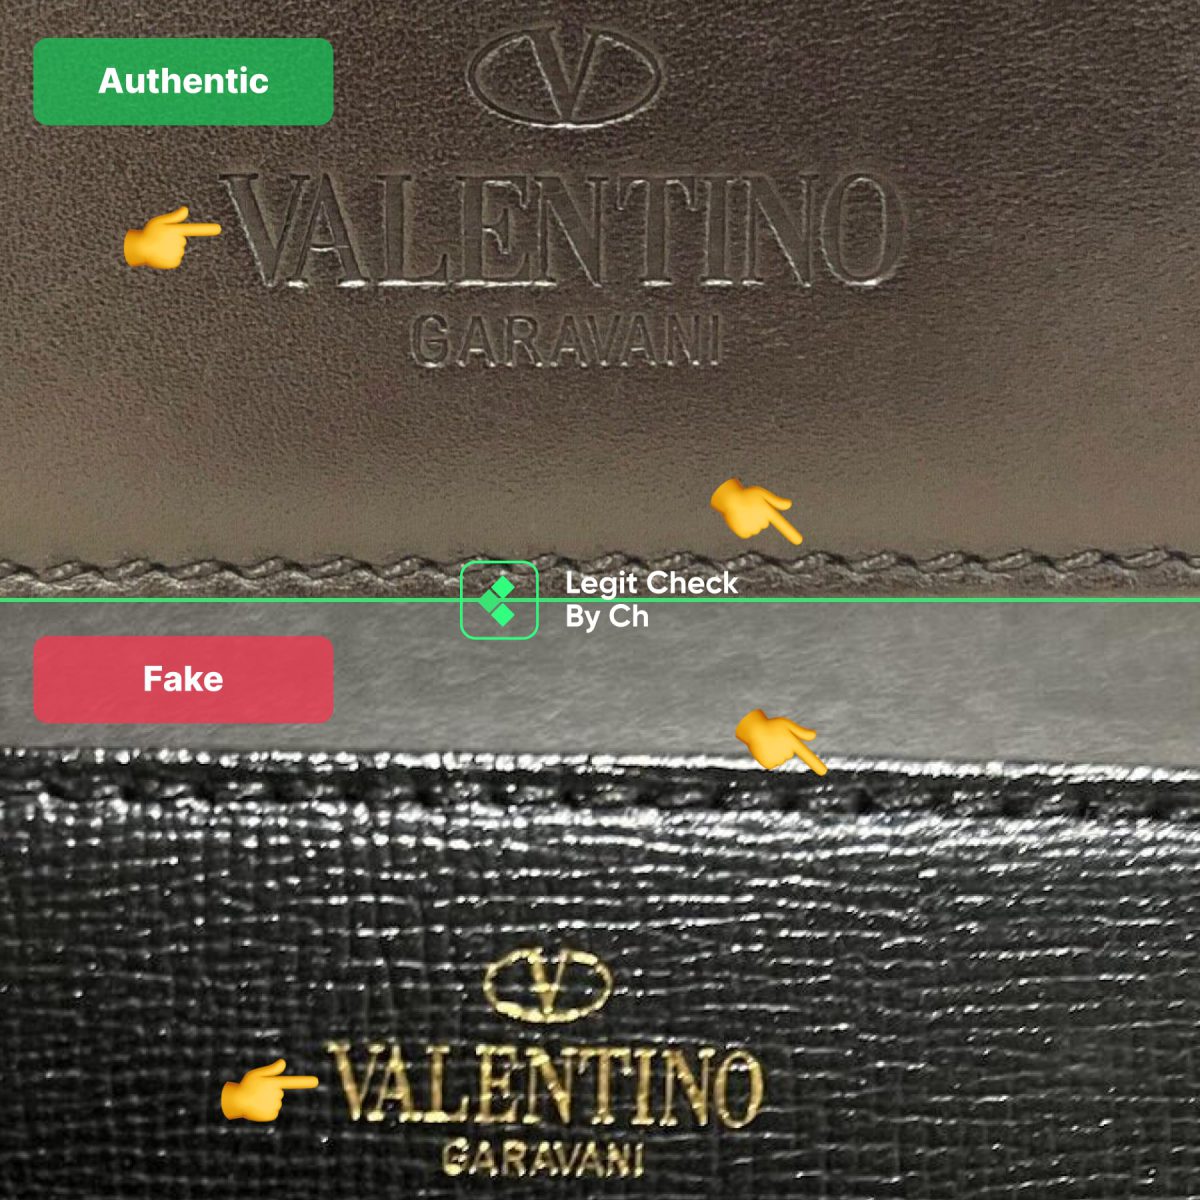 Comparing real vs fake Valentino bag inscriptions